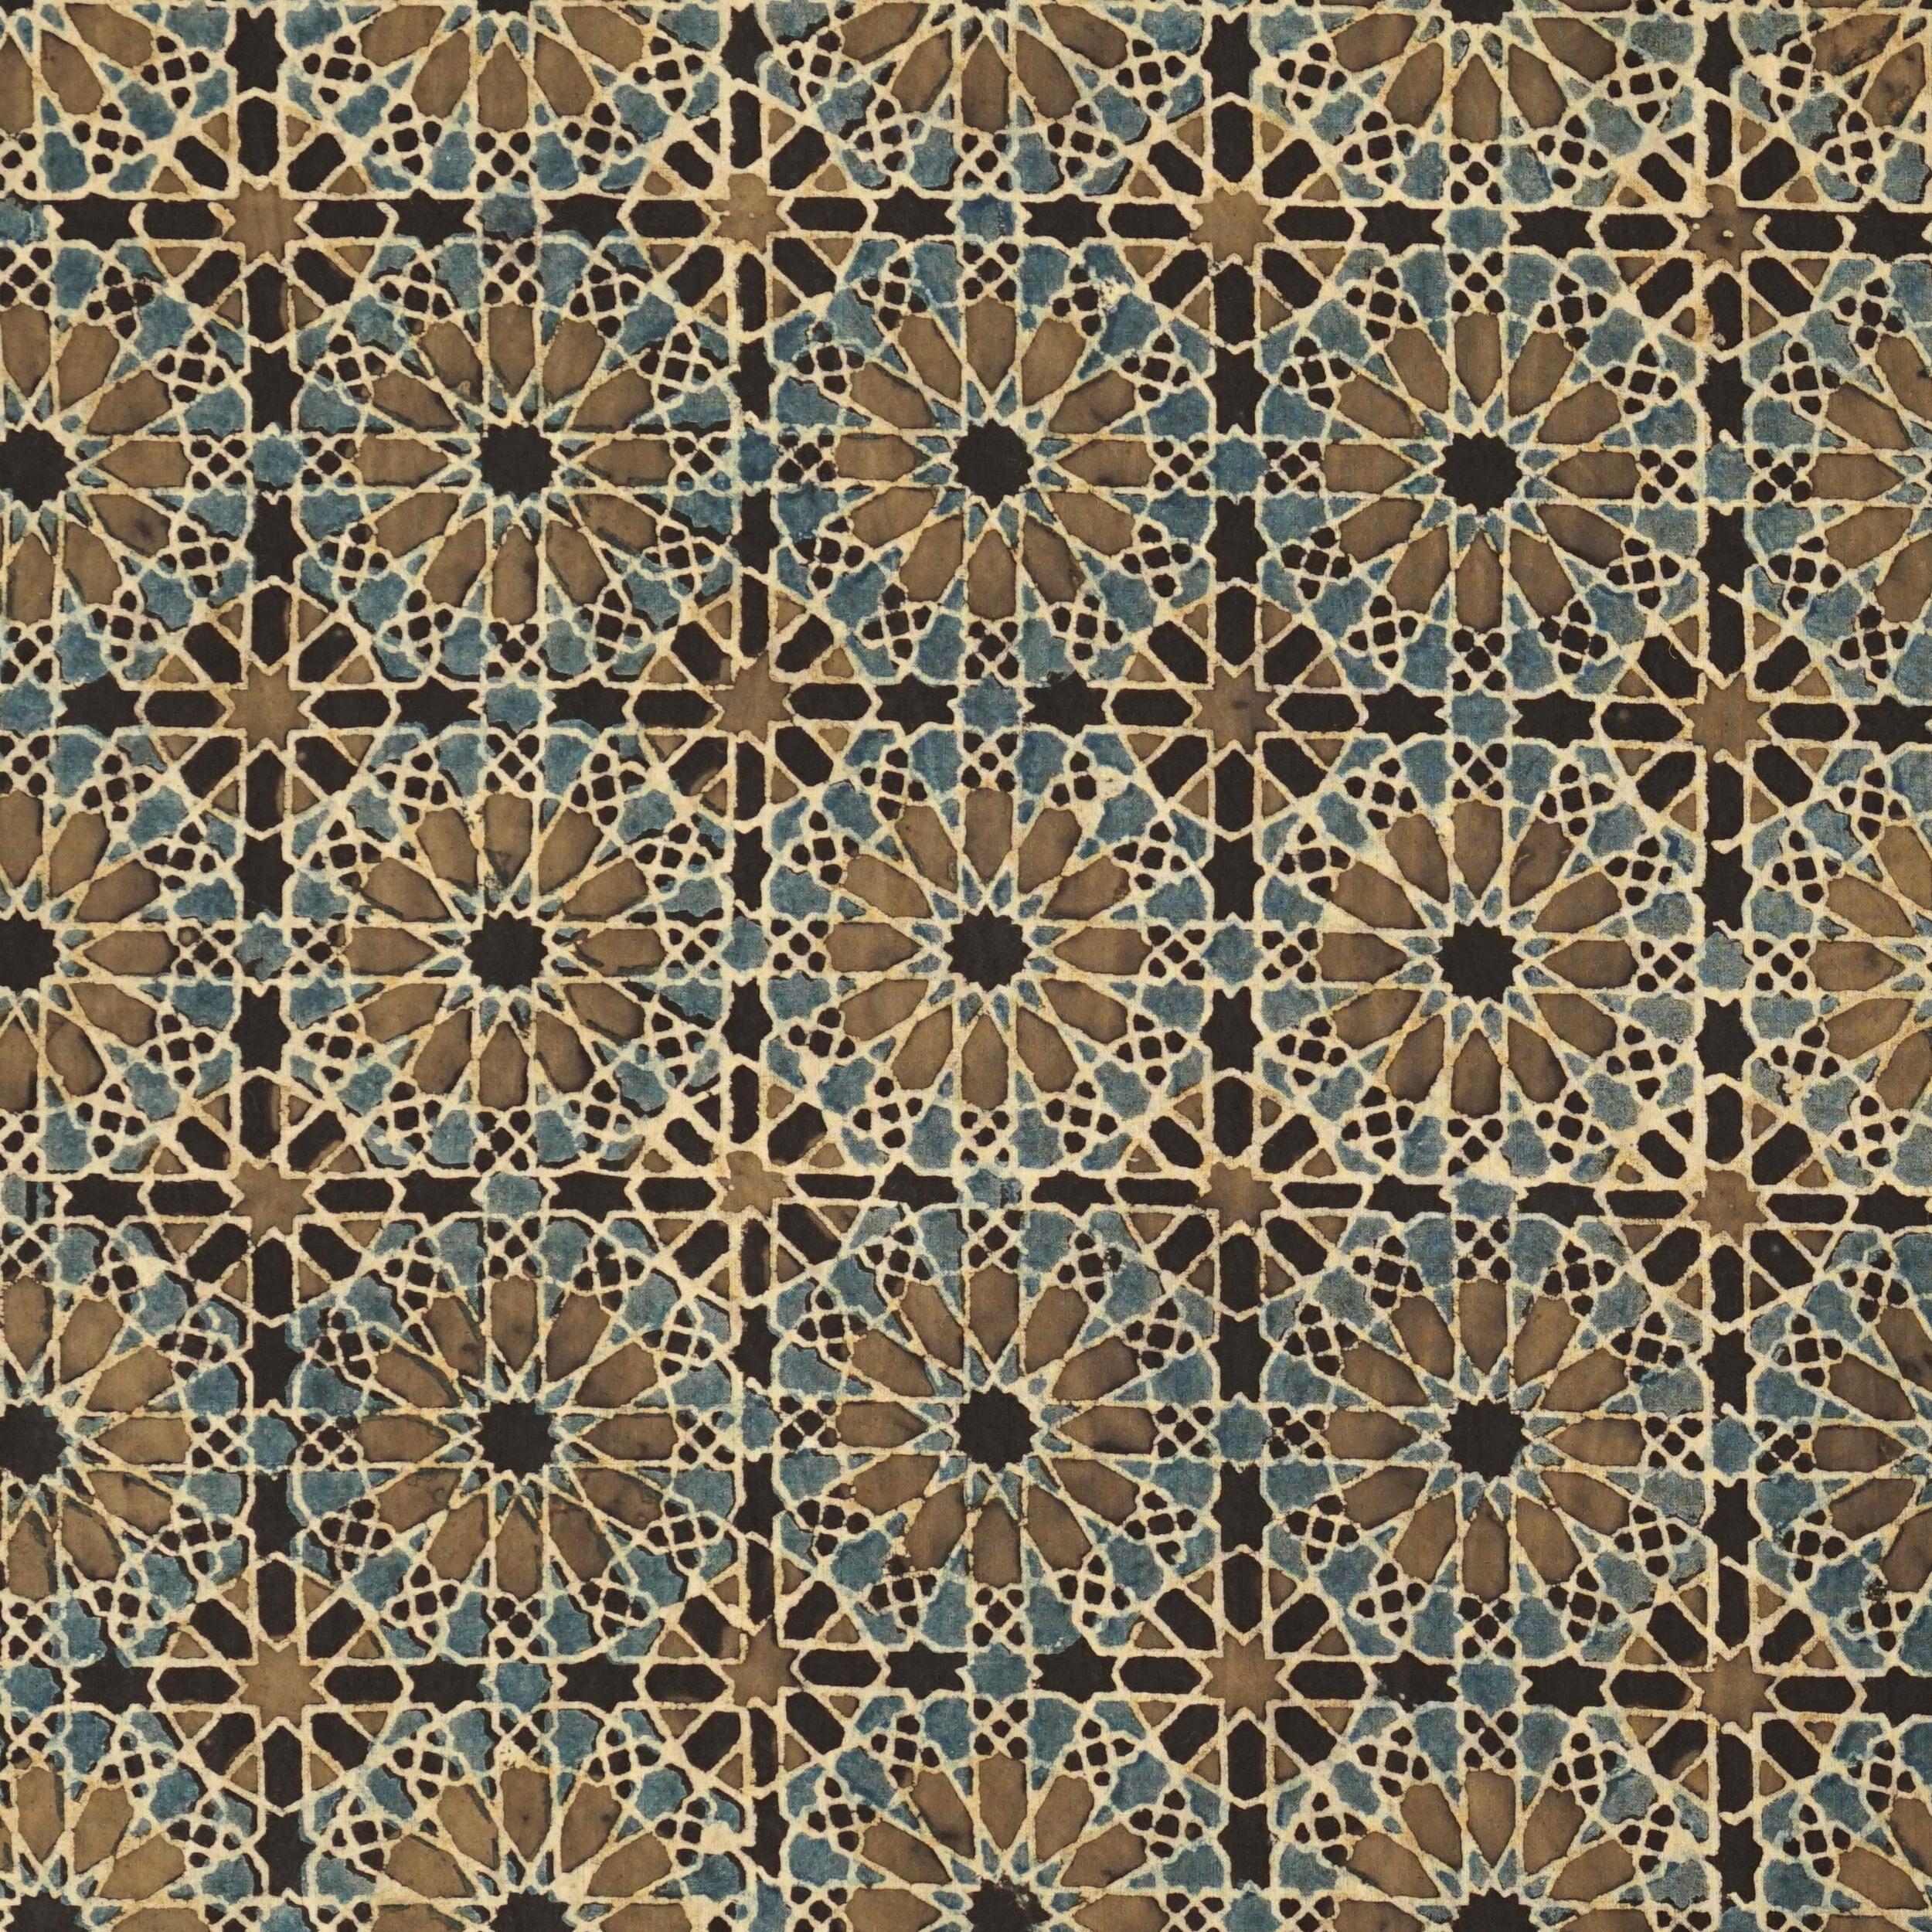 SIK08 - Indian Block Printed Cotton Fabric - Ajrak - Coffee Brown Base, Green, Lime Web - Flat